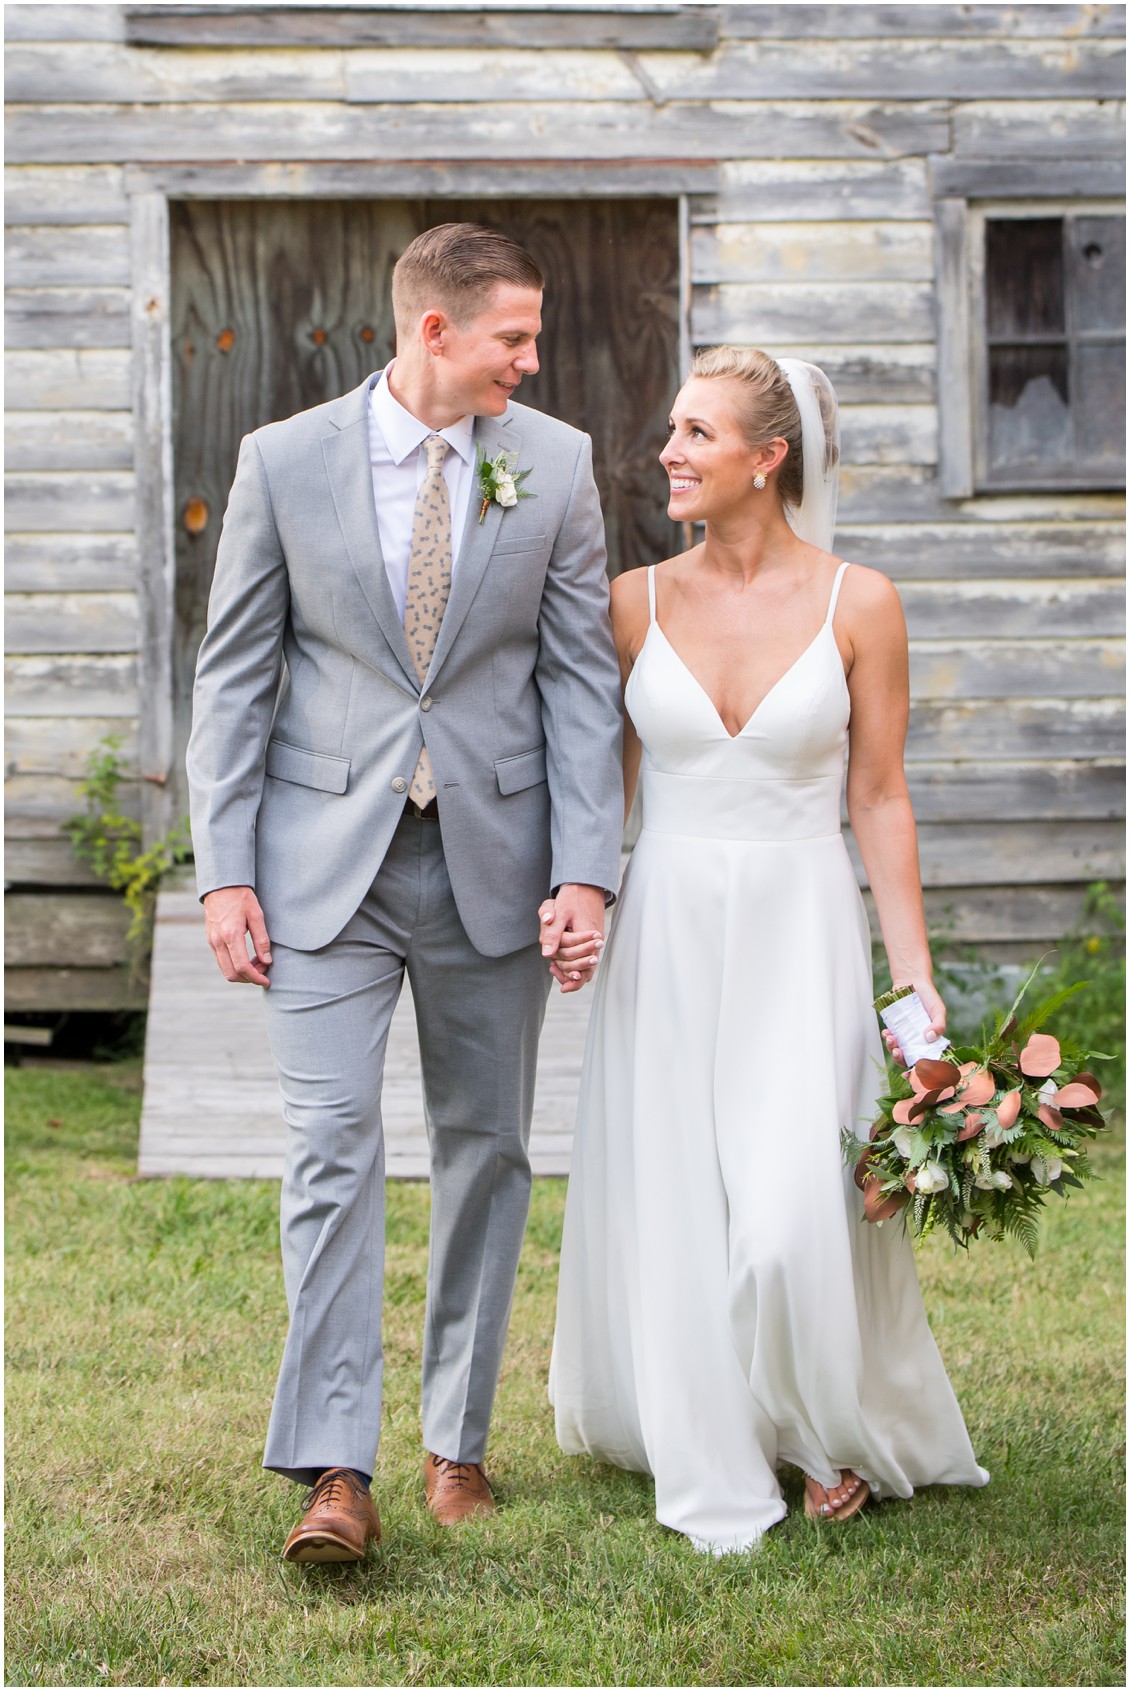 Pineapple Theme Wedding Bride and Groom | My Eastern Shore Wedding | The Oaks Waterfront Inn | Monteray Farms 